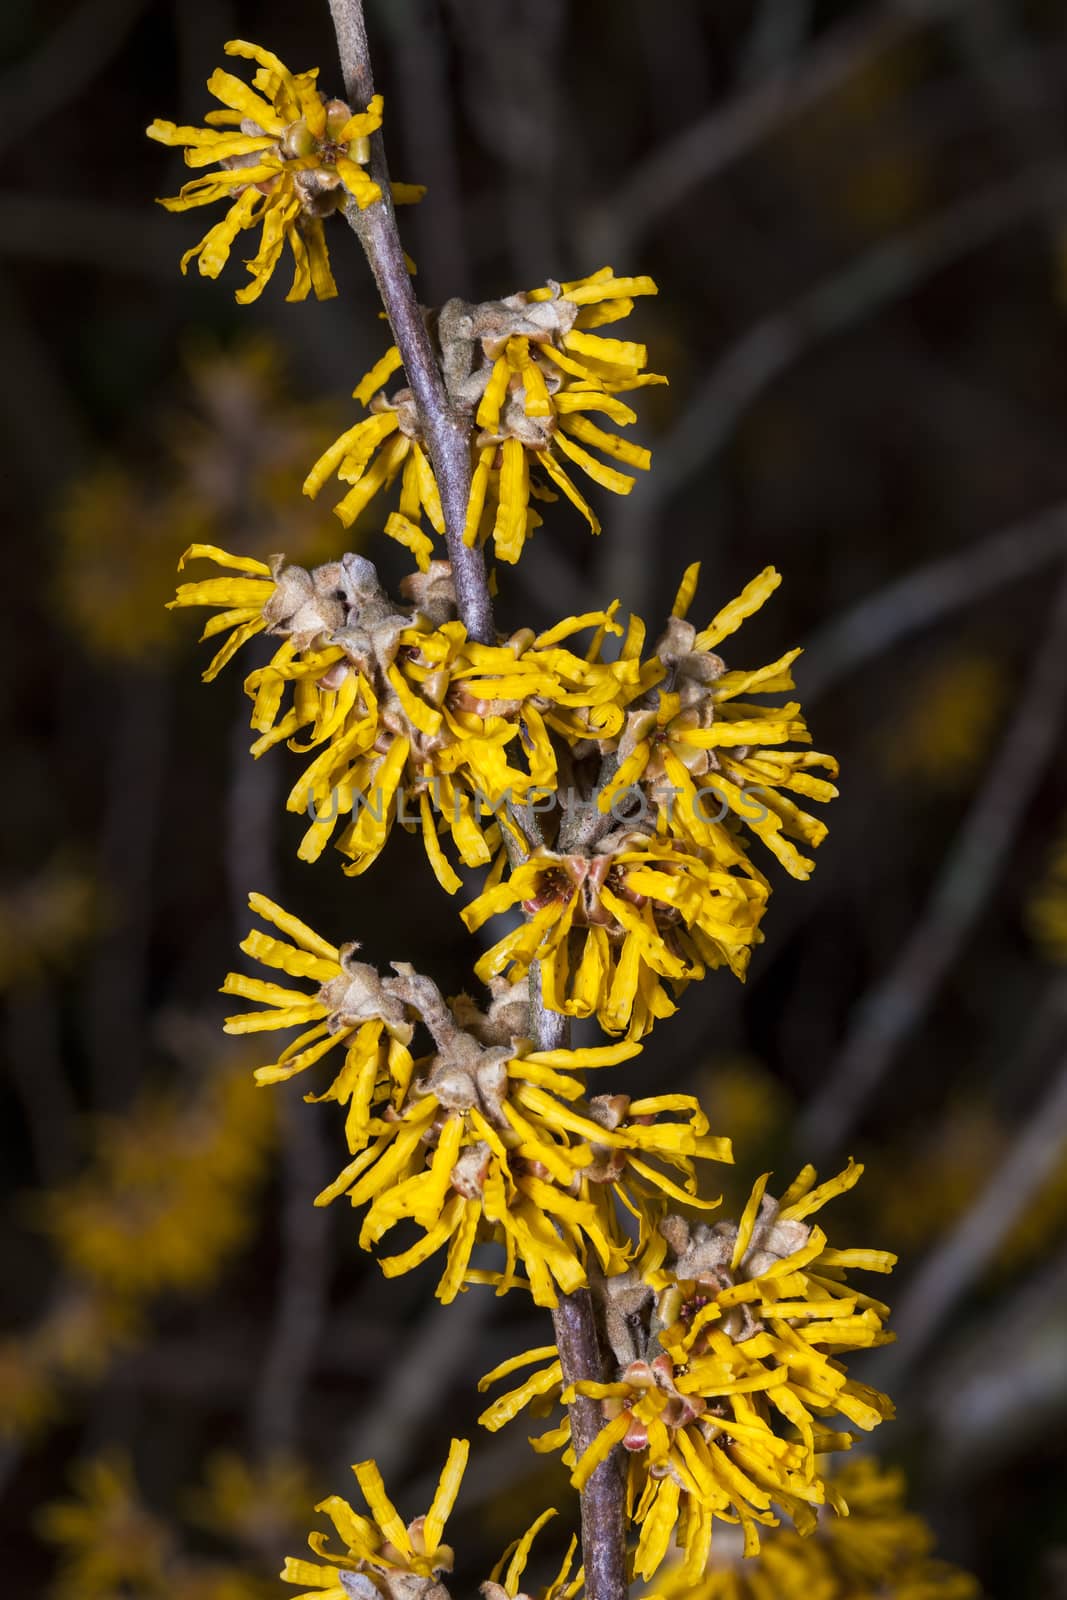 Hamamelis 'Brevipetala' (Witch Hazel) a yellow winter spring flowering shrub